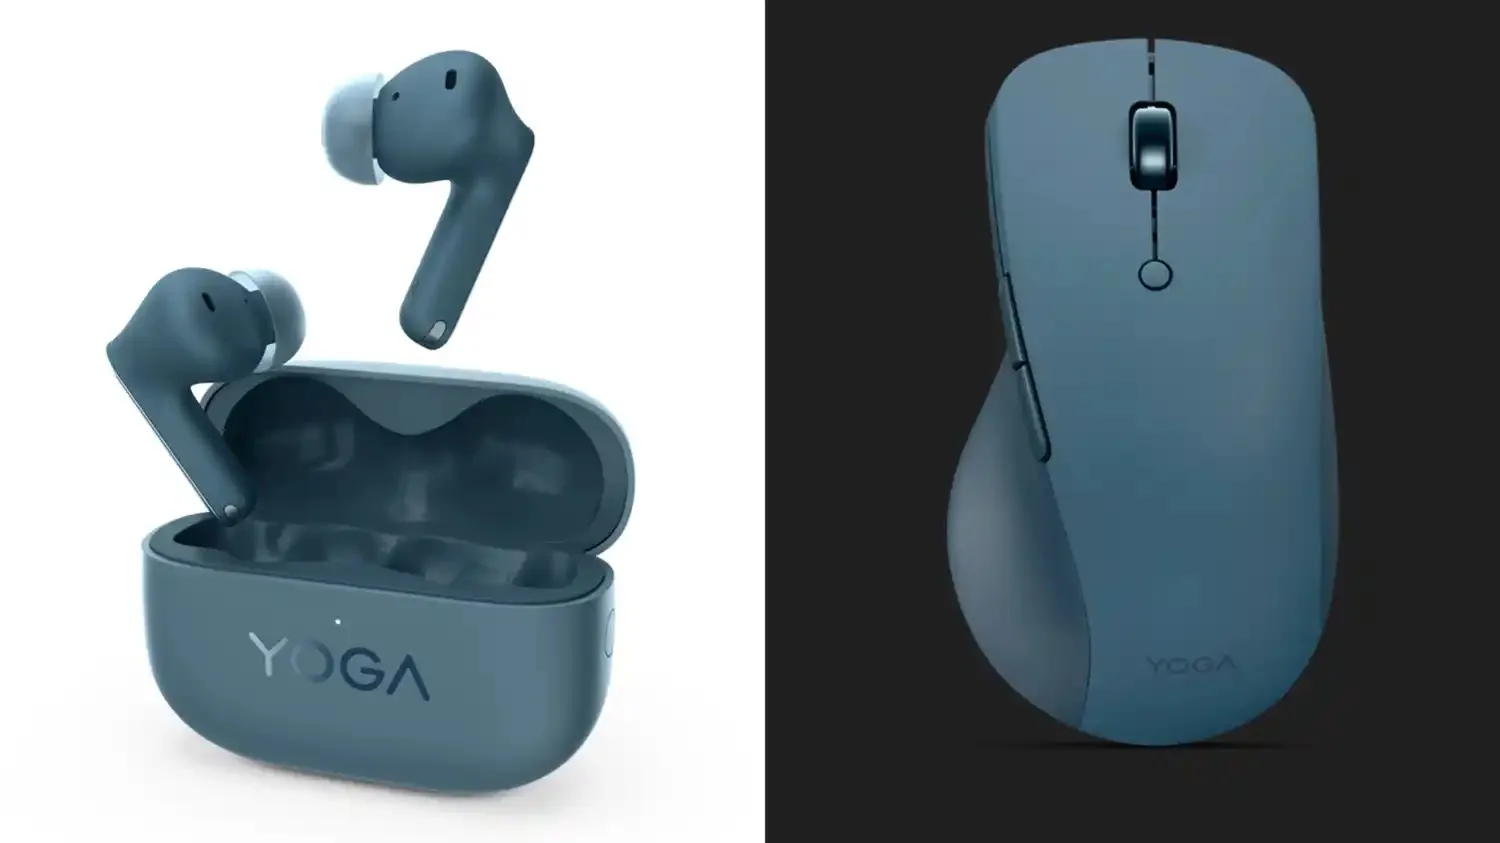 Lenovo Yoga True Wireless Stereo Earbuds e Lenovo Yoga Pro Mouse jpg